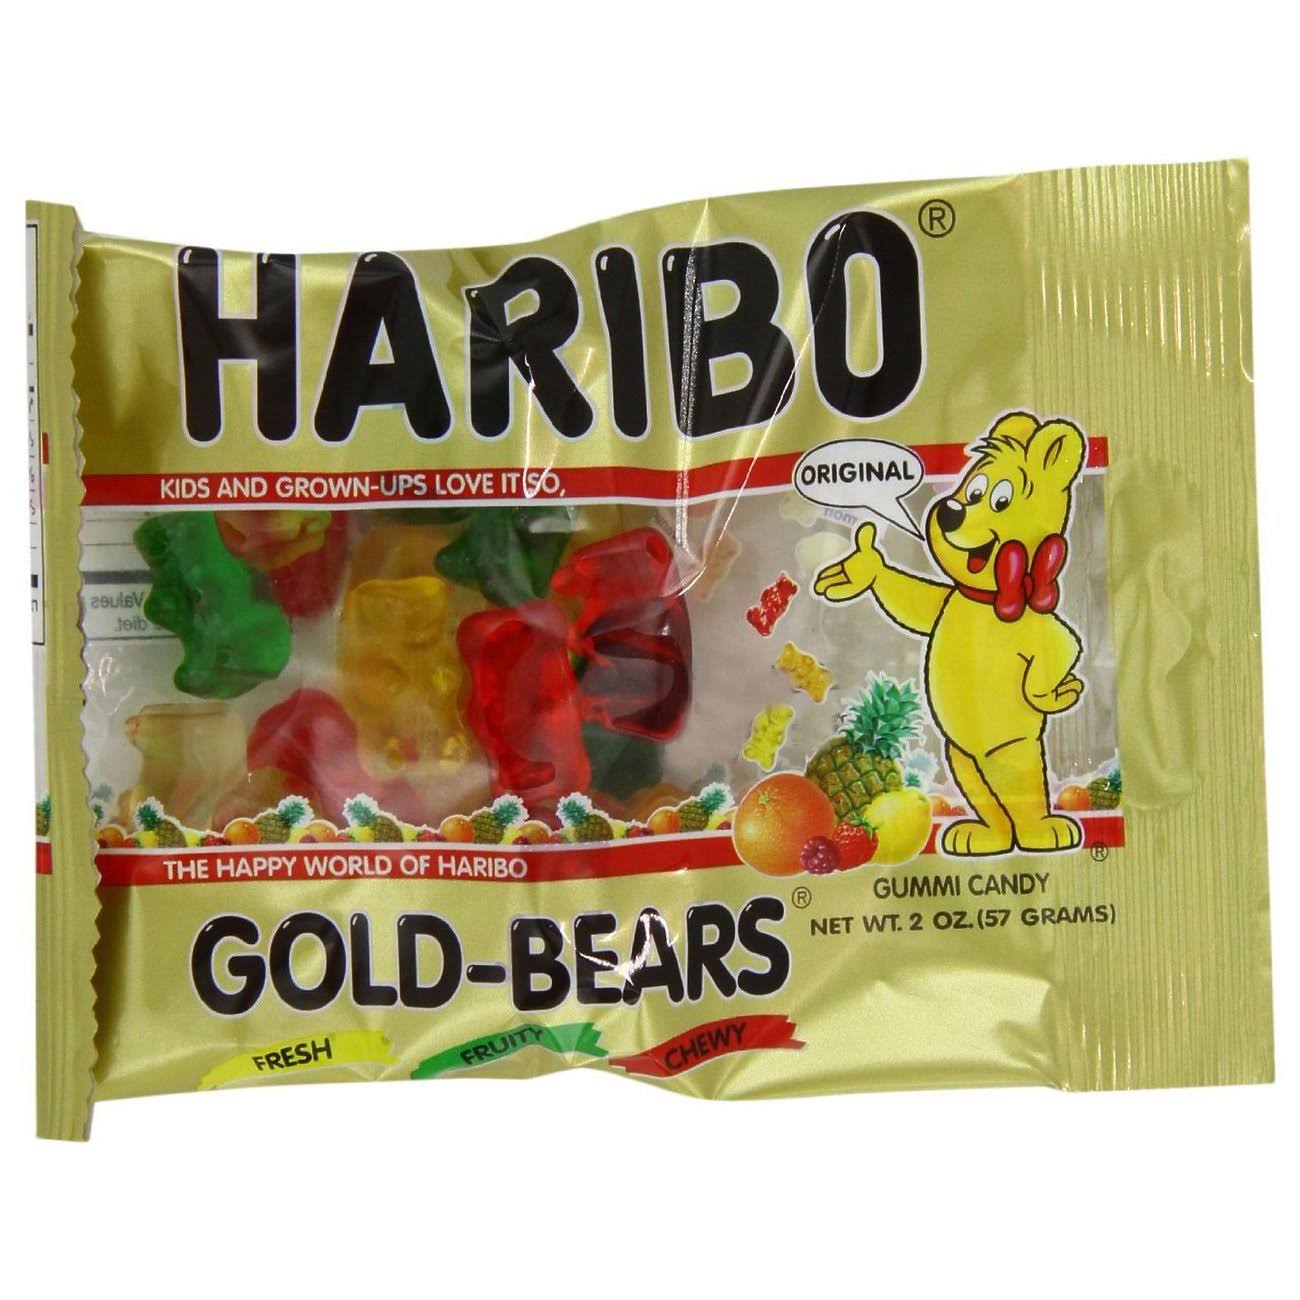 Haribo Gold Bears Gummi Candy - 2 oz bag